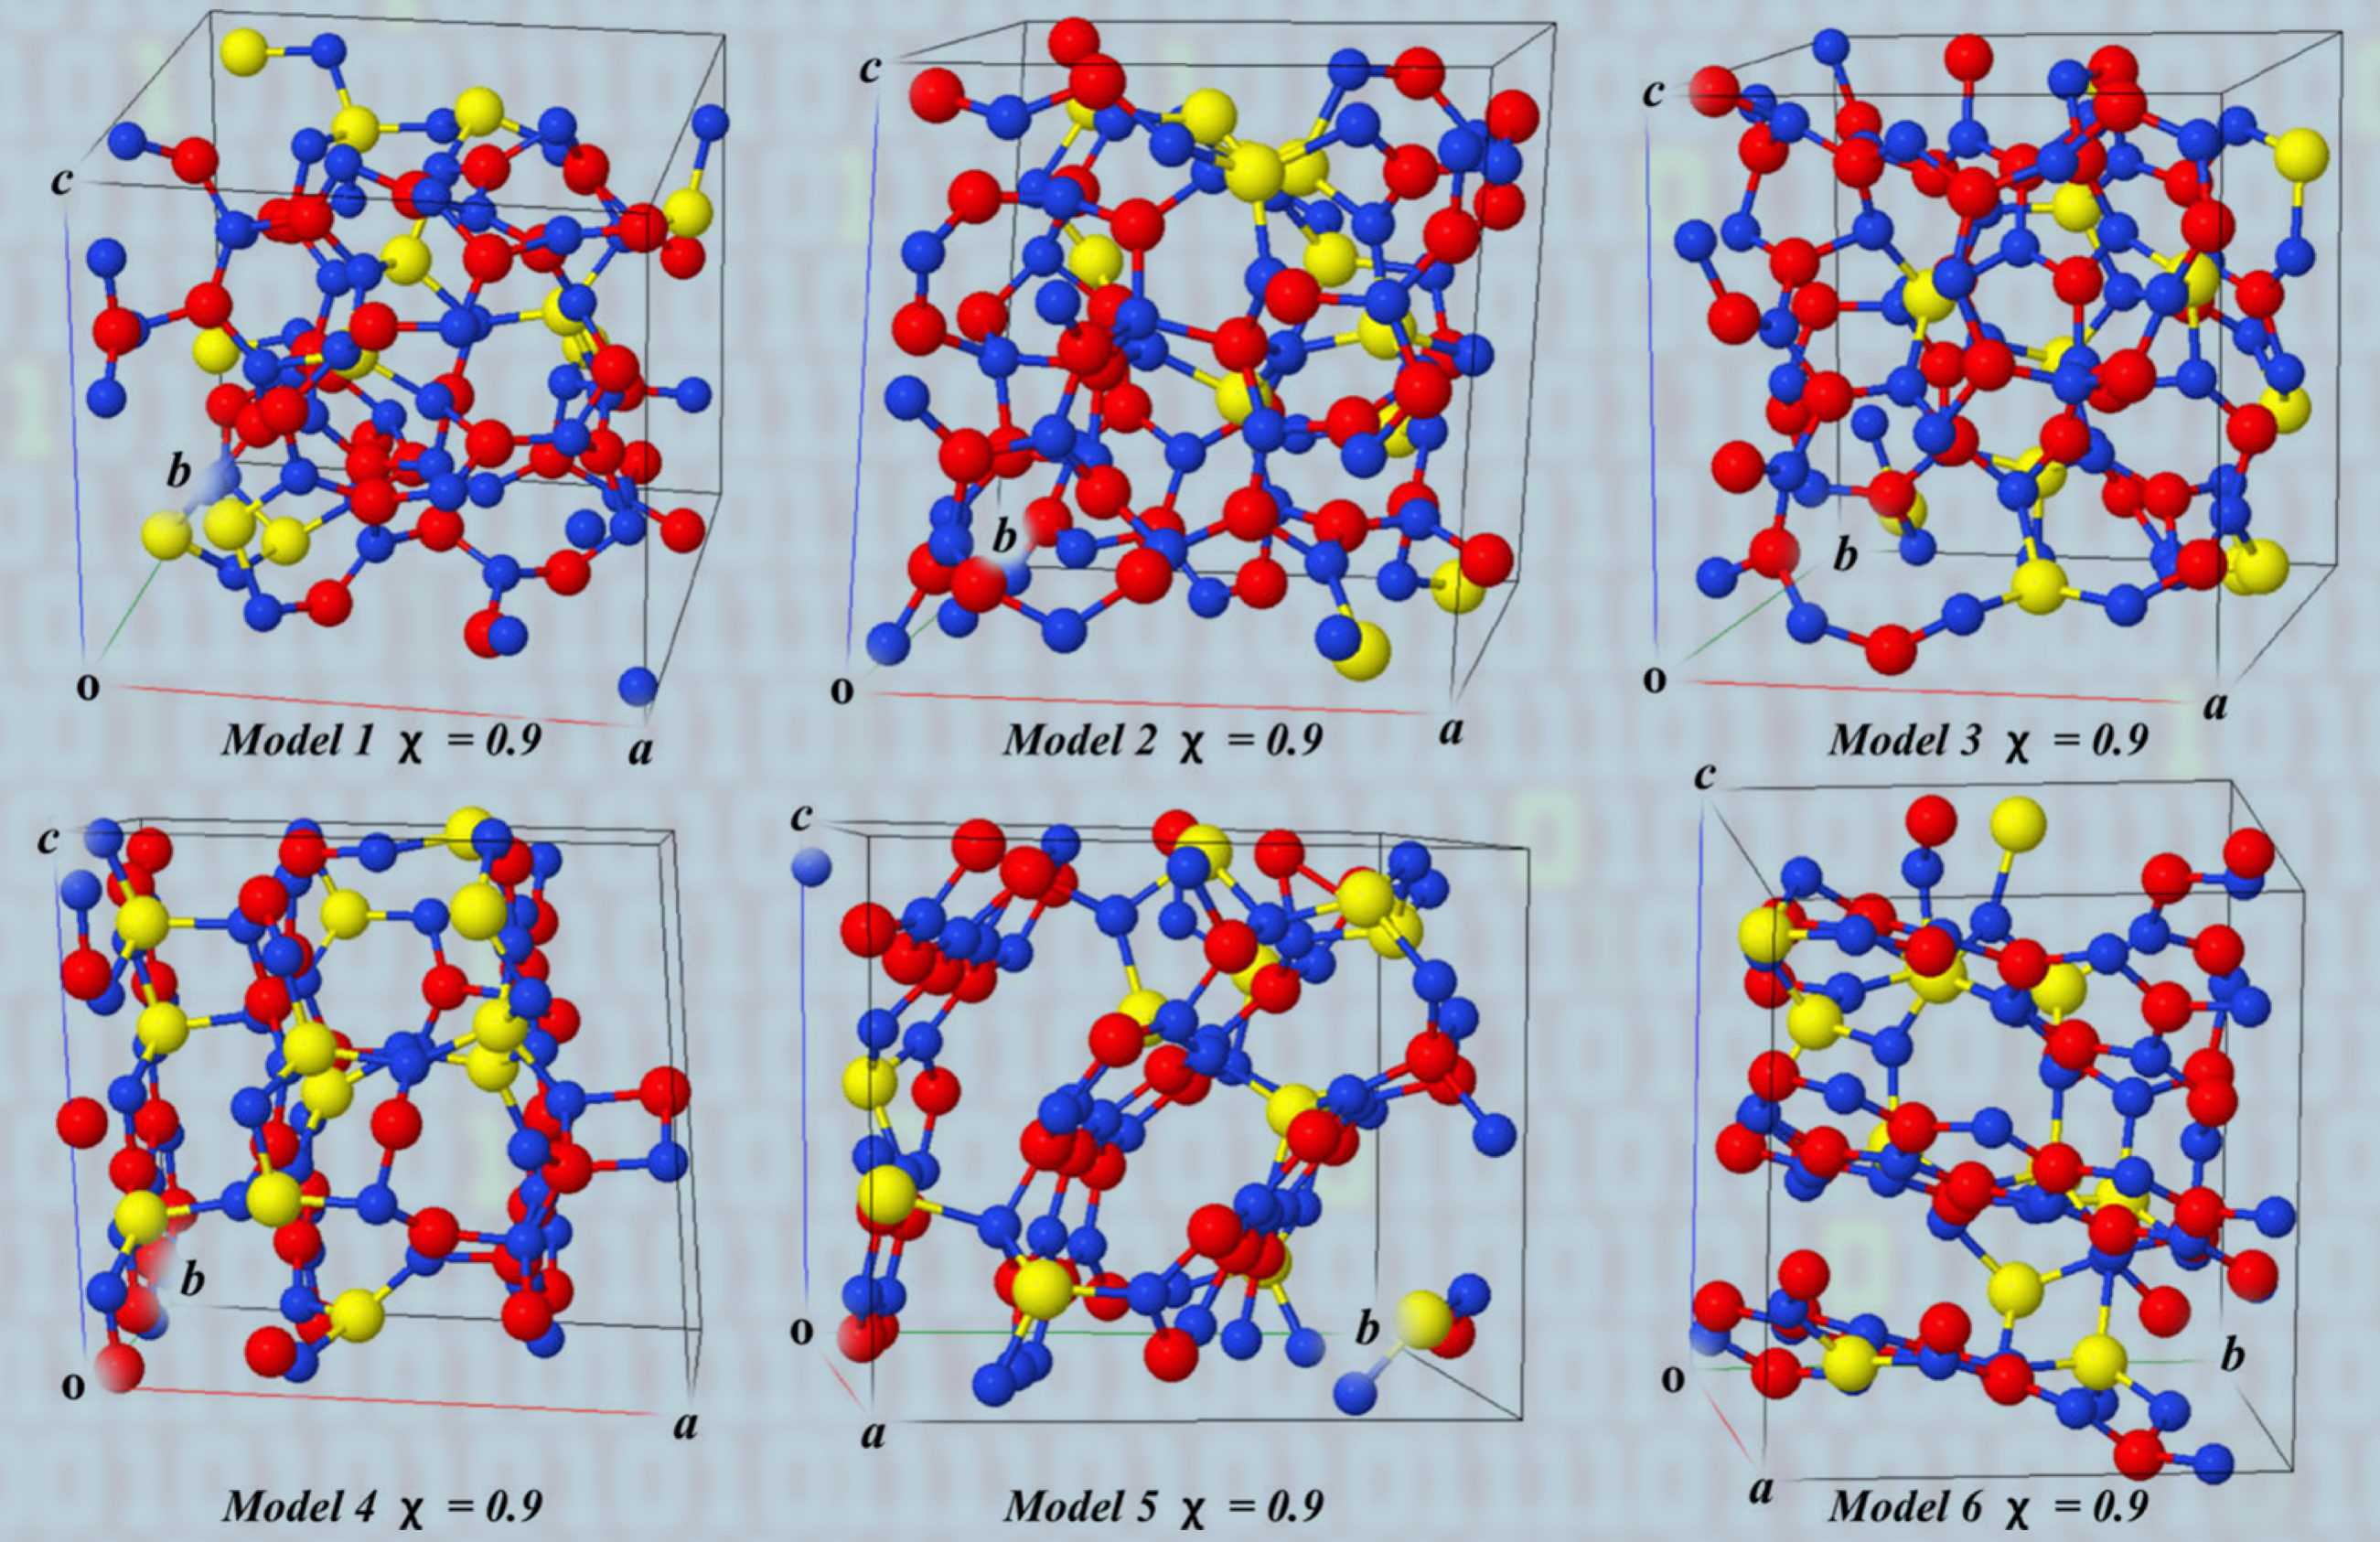 Six atomistic models of amorphous structures